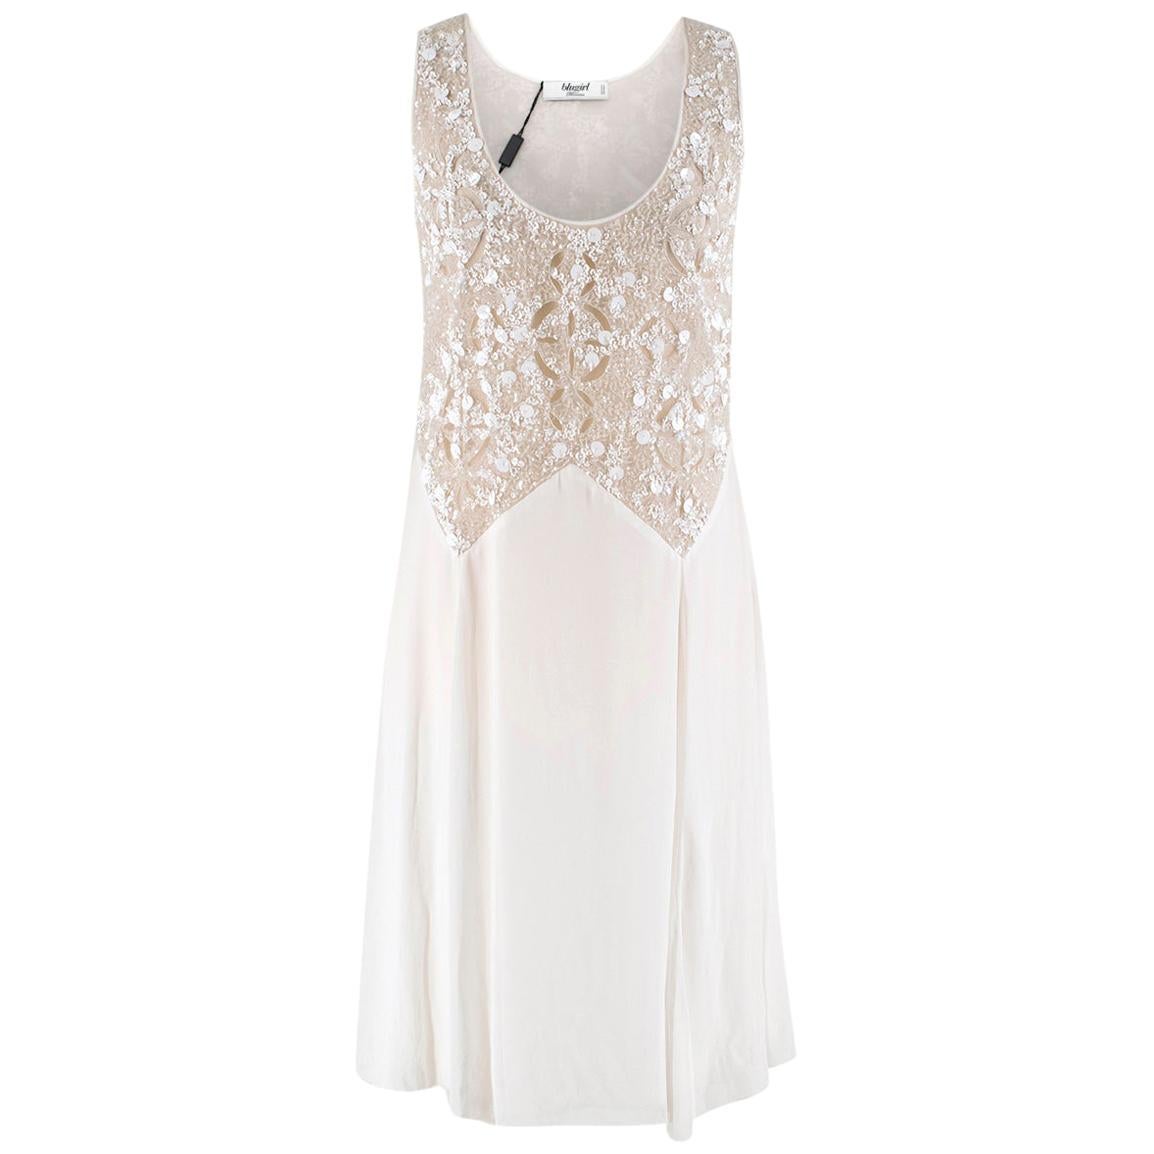 Blugirl White Sequin Embellished Midi Dress estimated size S For Sale